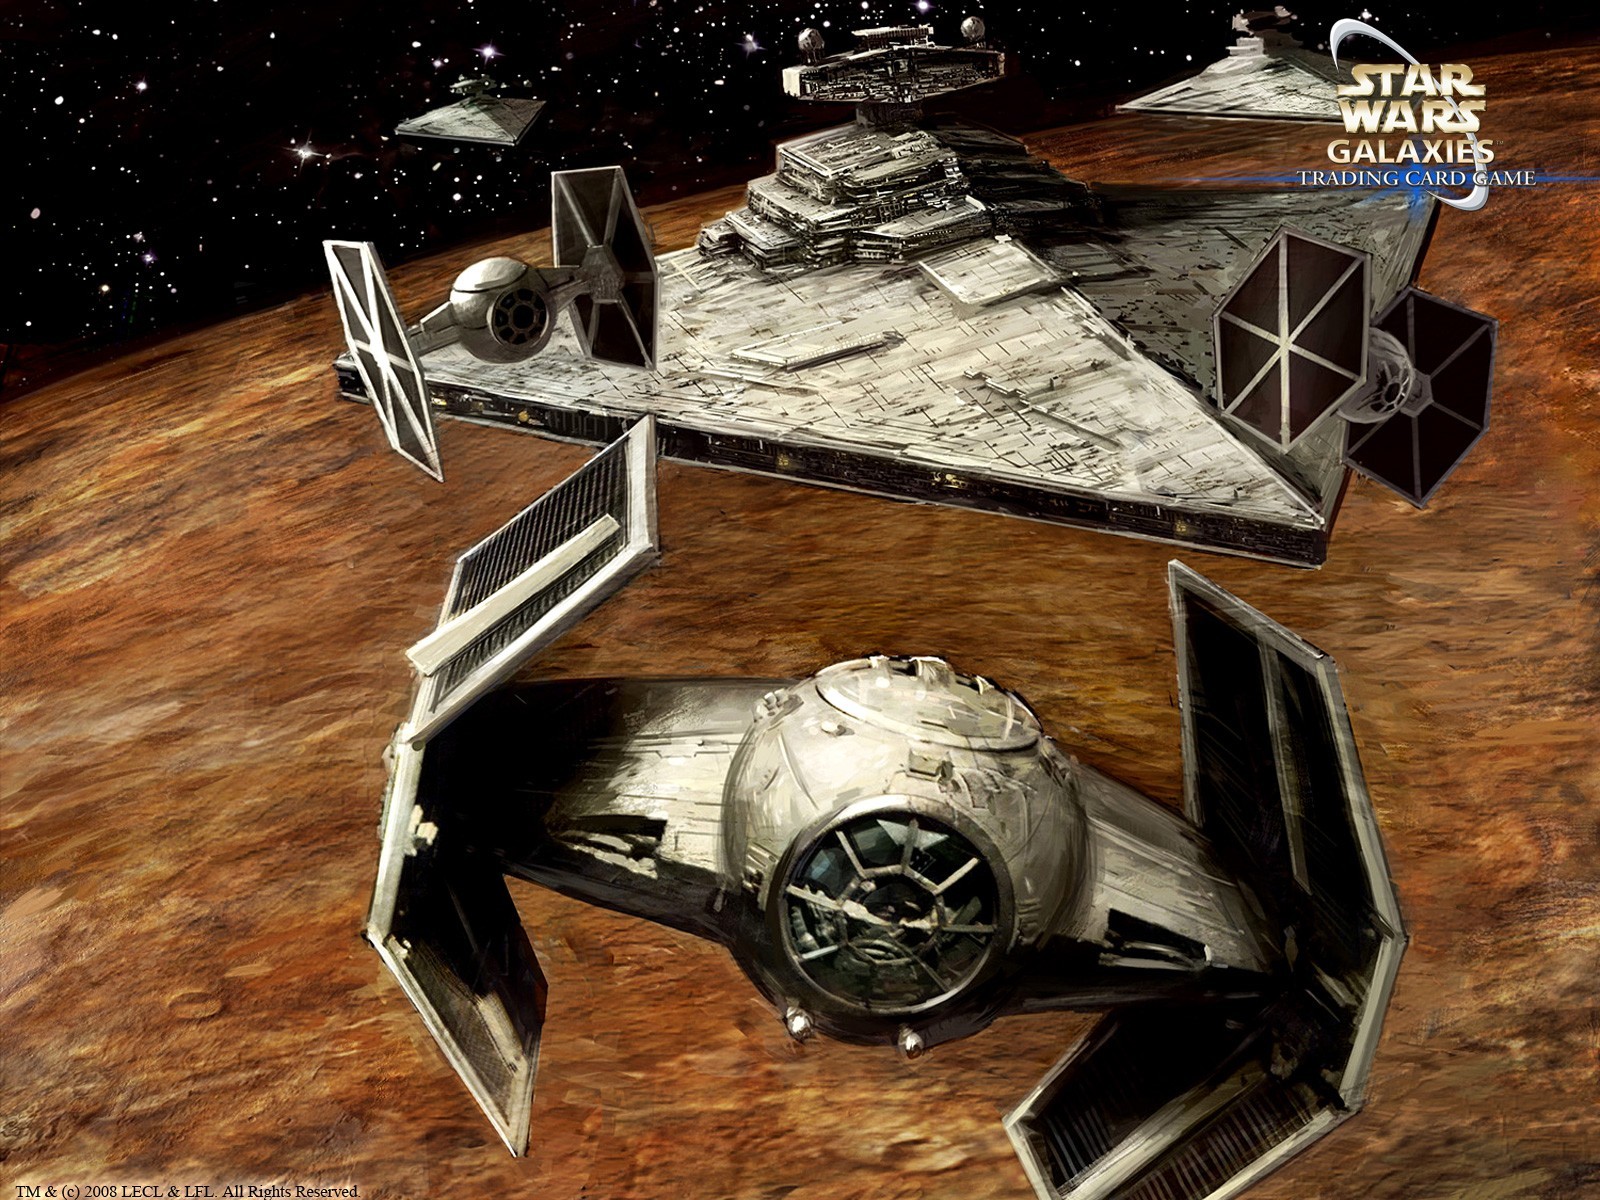 General 1600x1200 Star Wars Star Wars: Empire at War Star Destroyer Star Wars Ships science fiction artwork Imperial Forces